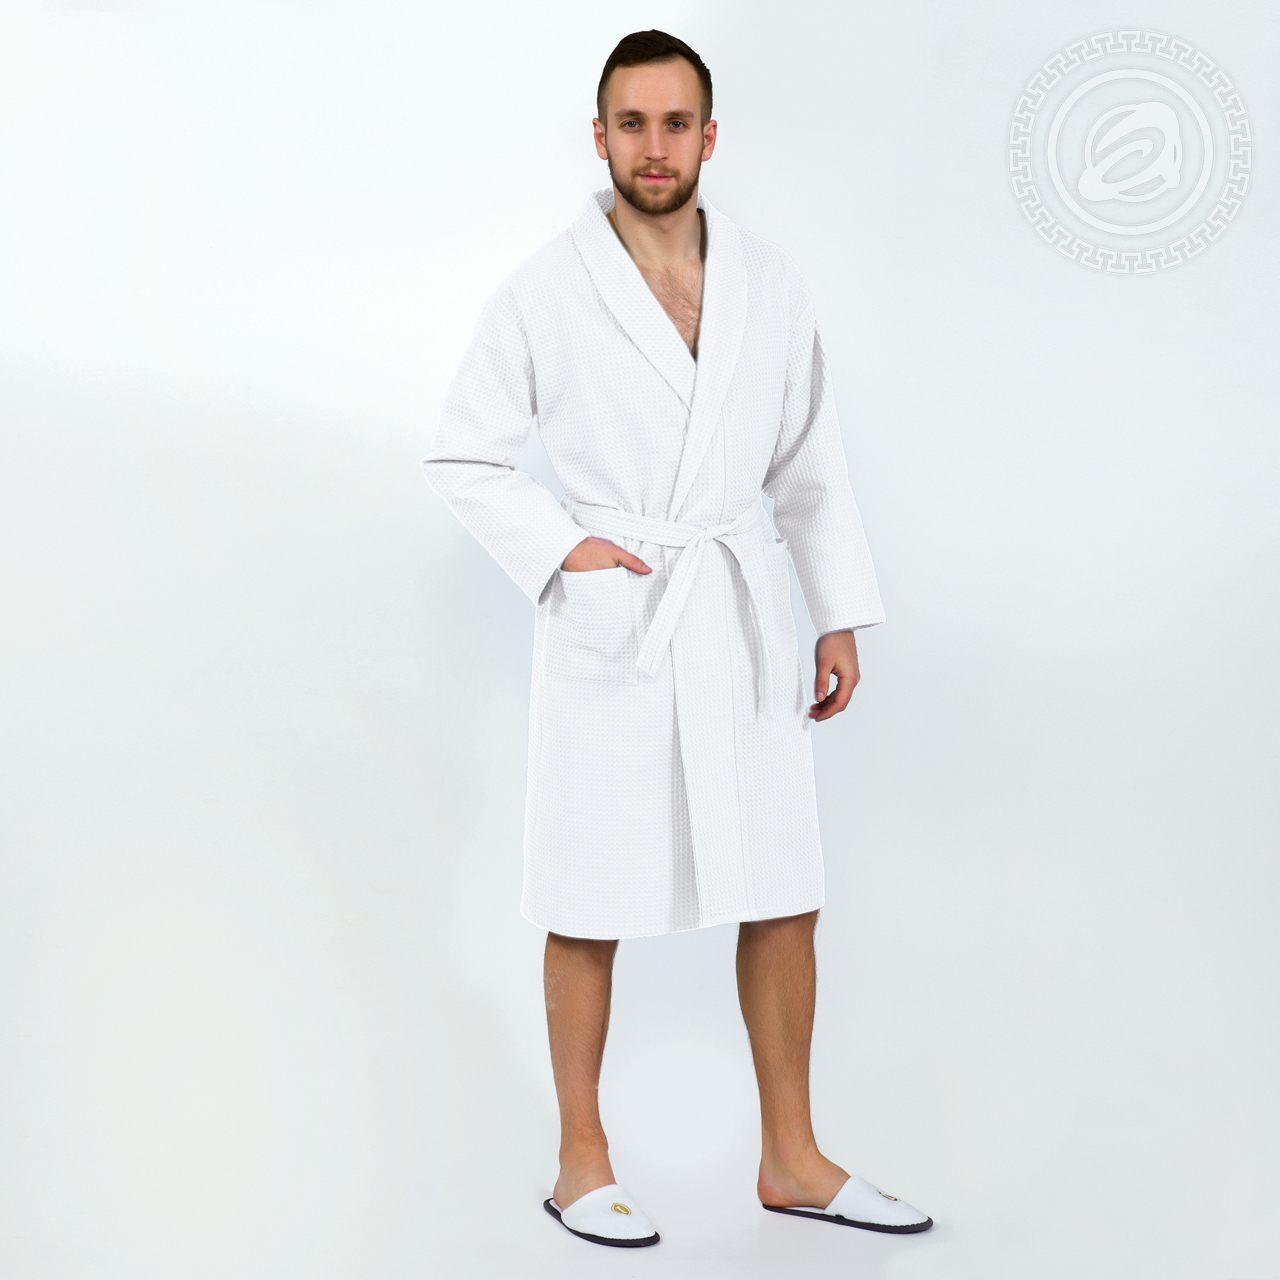 DOMTEKC Халат банный мужской, белый , размер L/XL